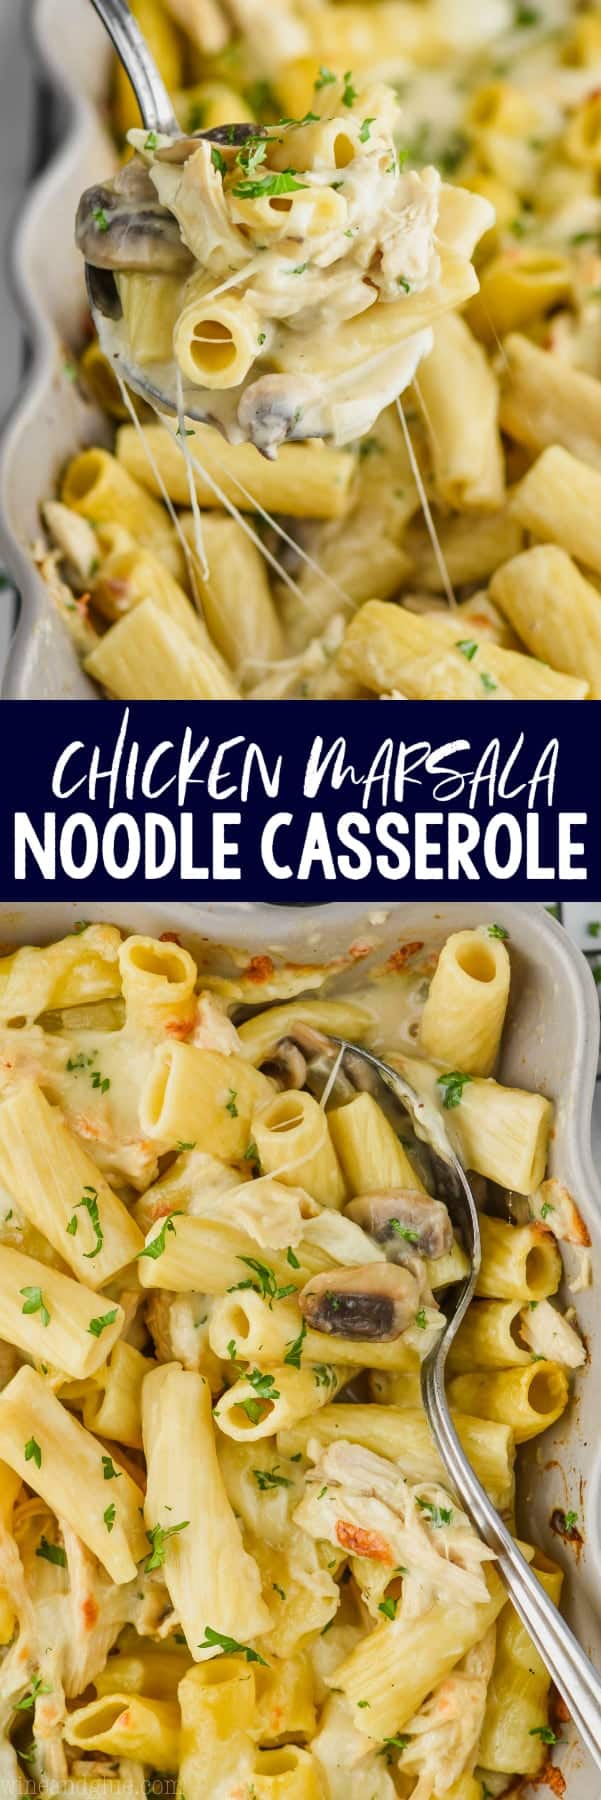 collage of chicken noodle casserole recipe